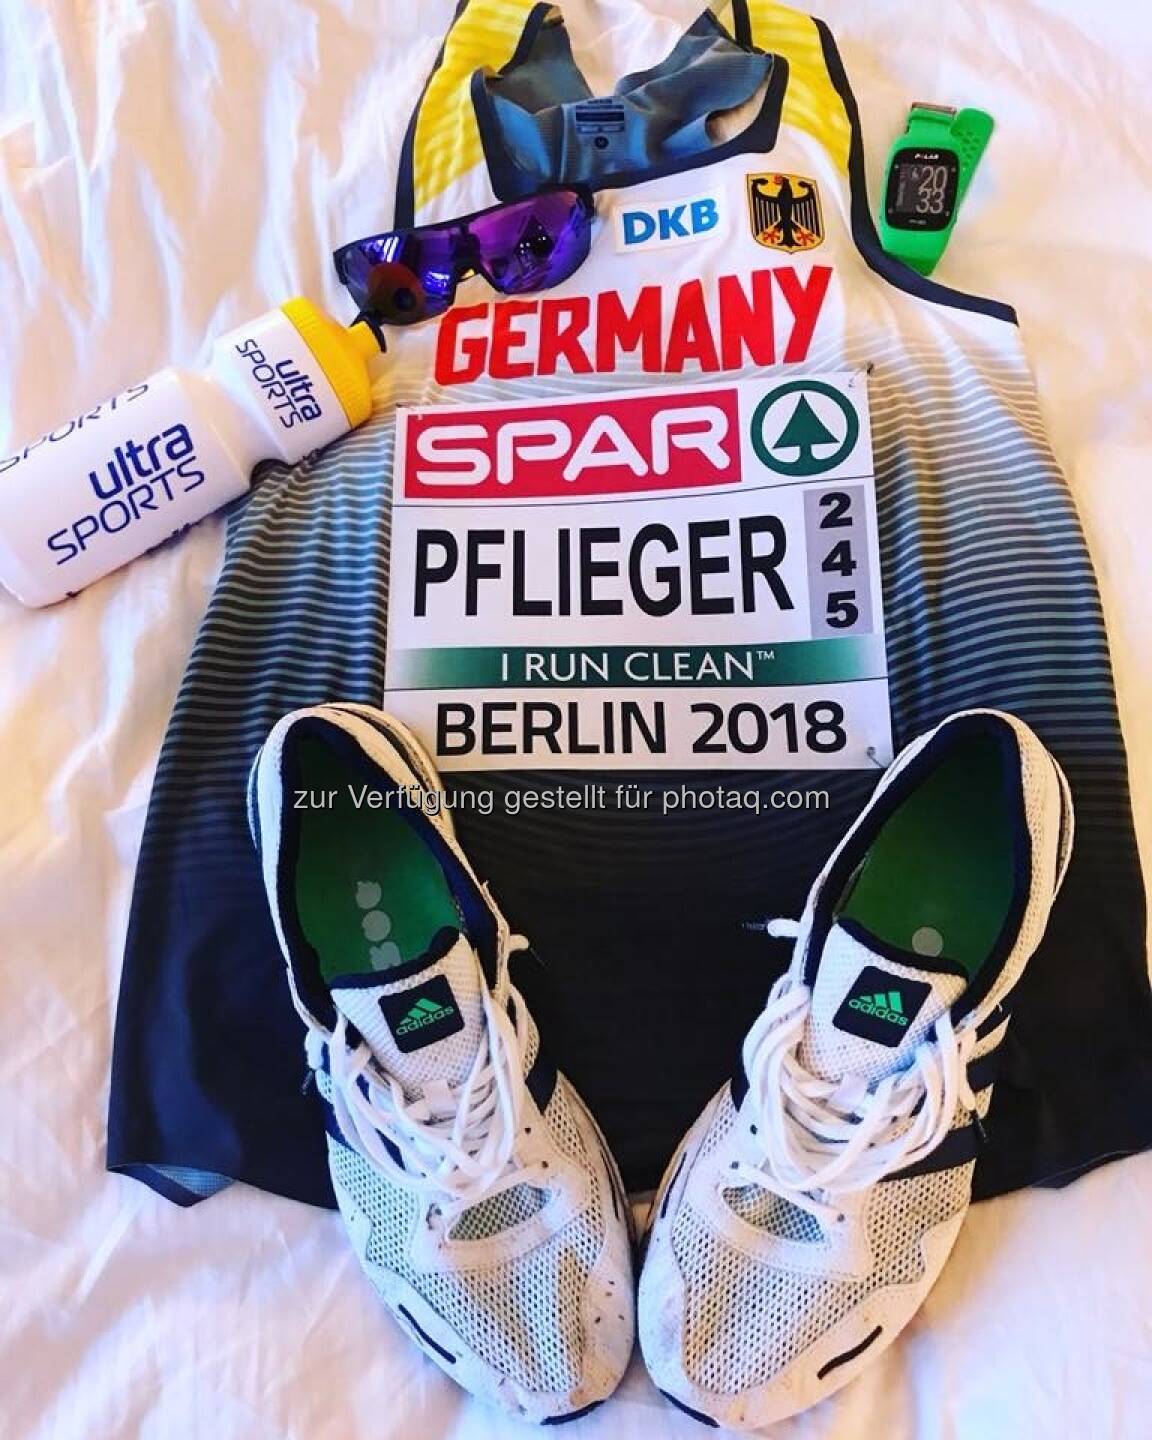 Berlin 2018 - Leichtathletik Europameisterschaften 